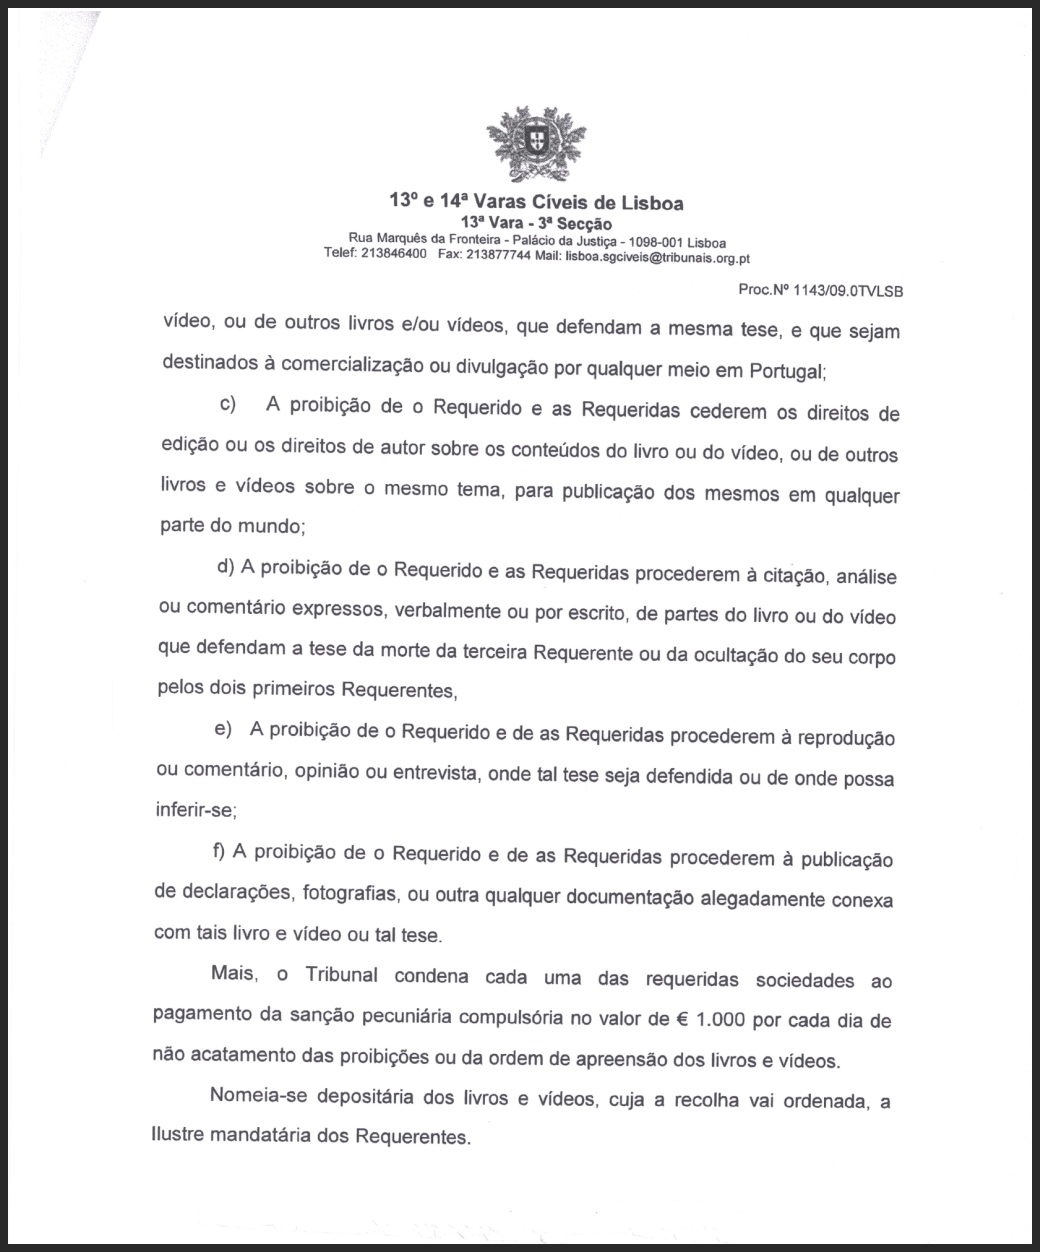 Decision of Portuguese judge, page 2